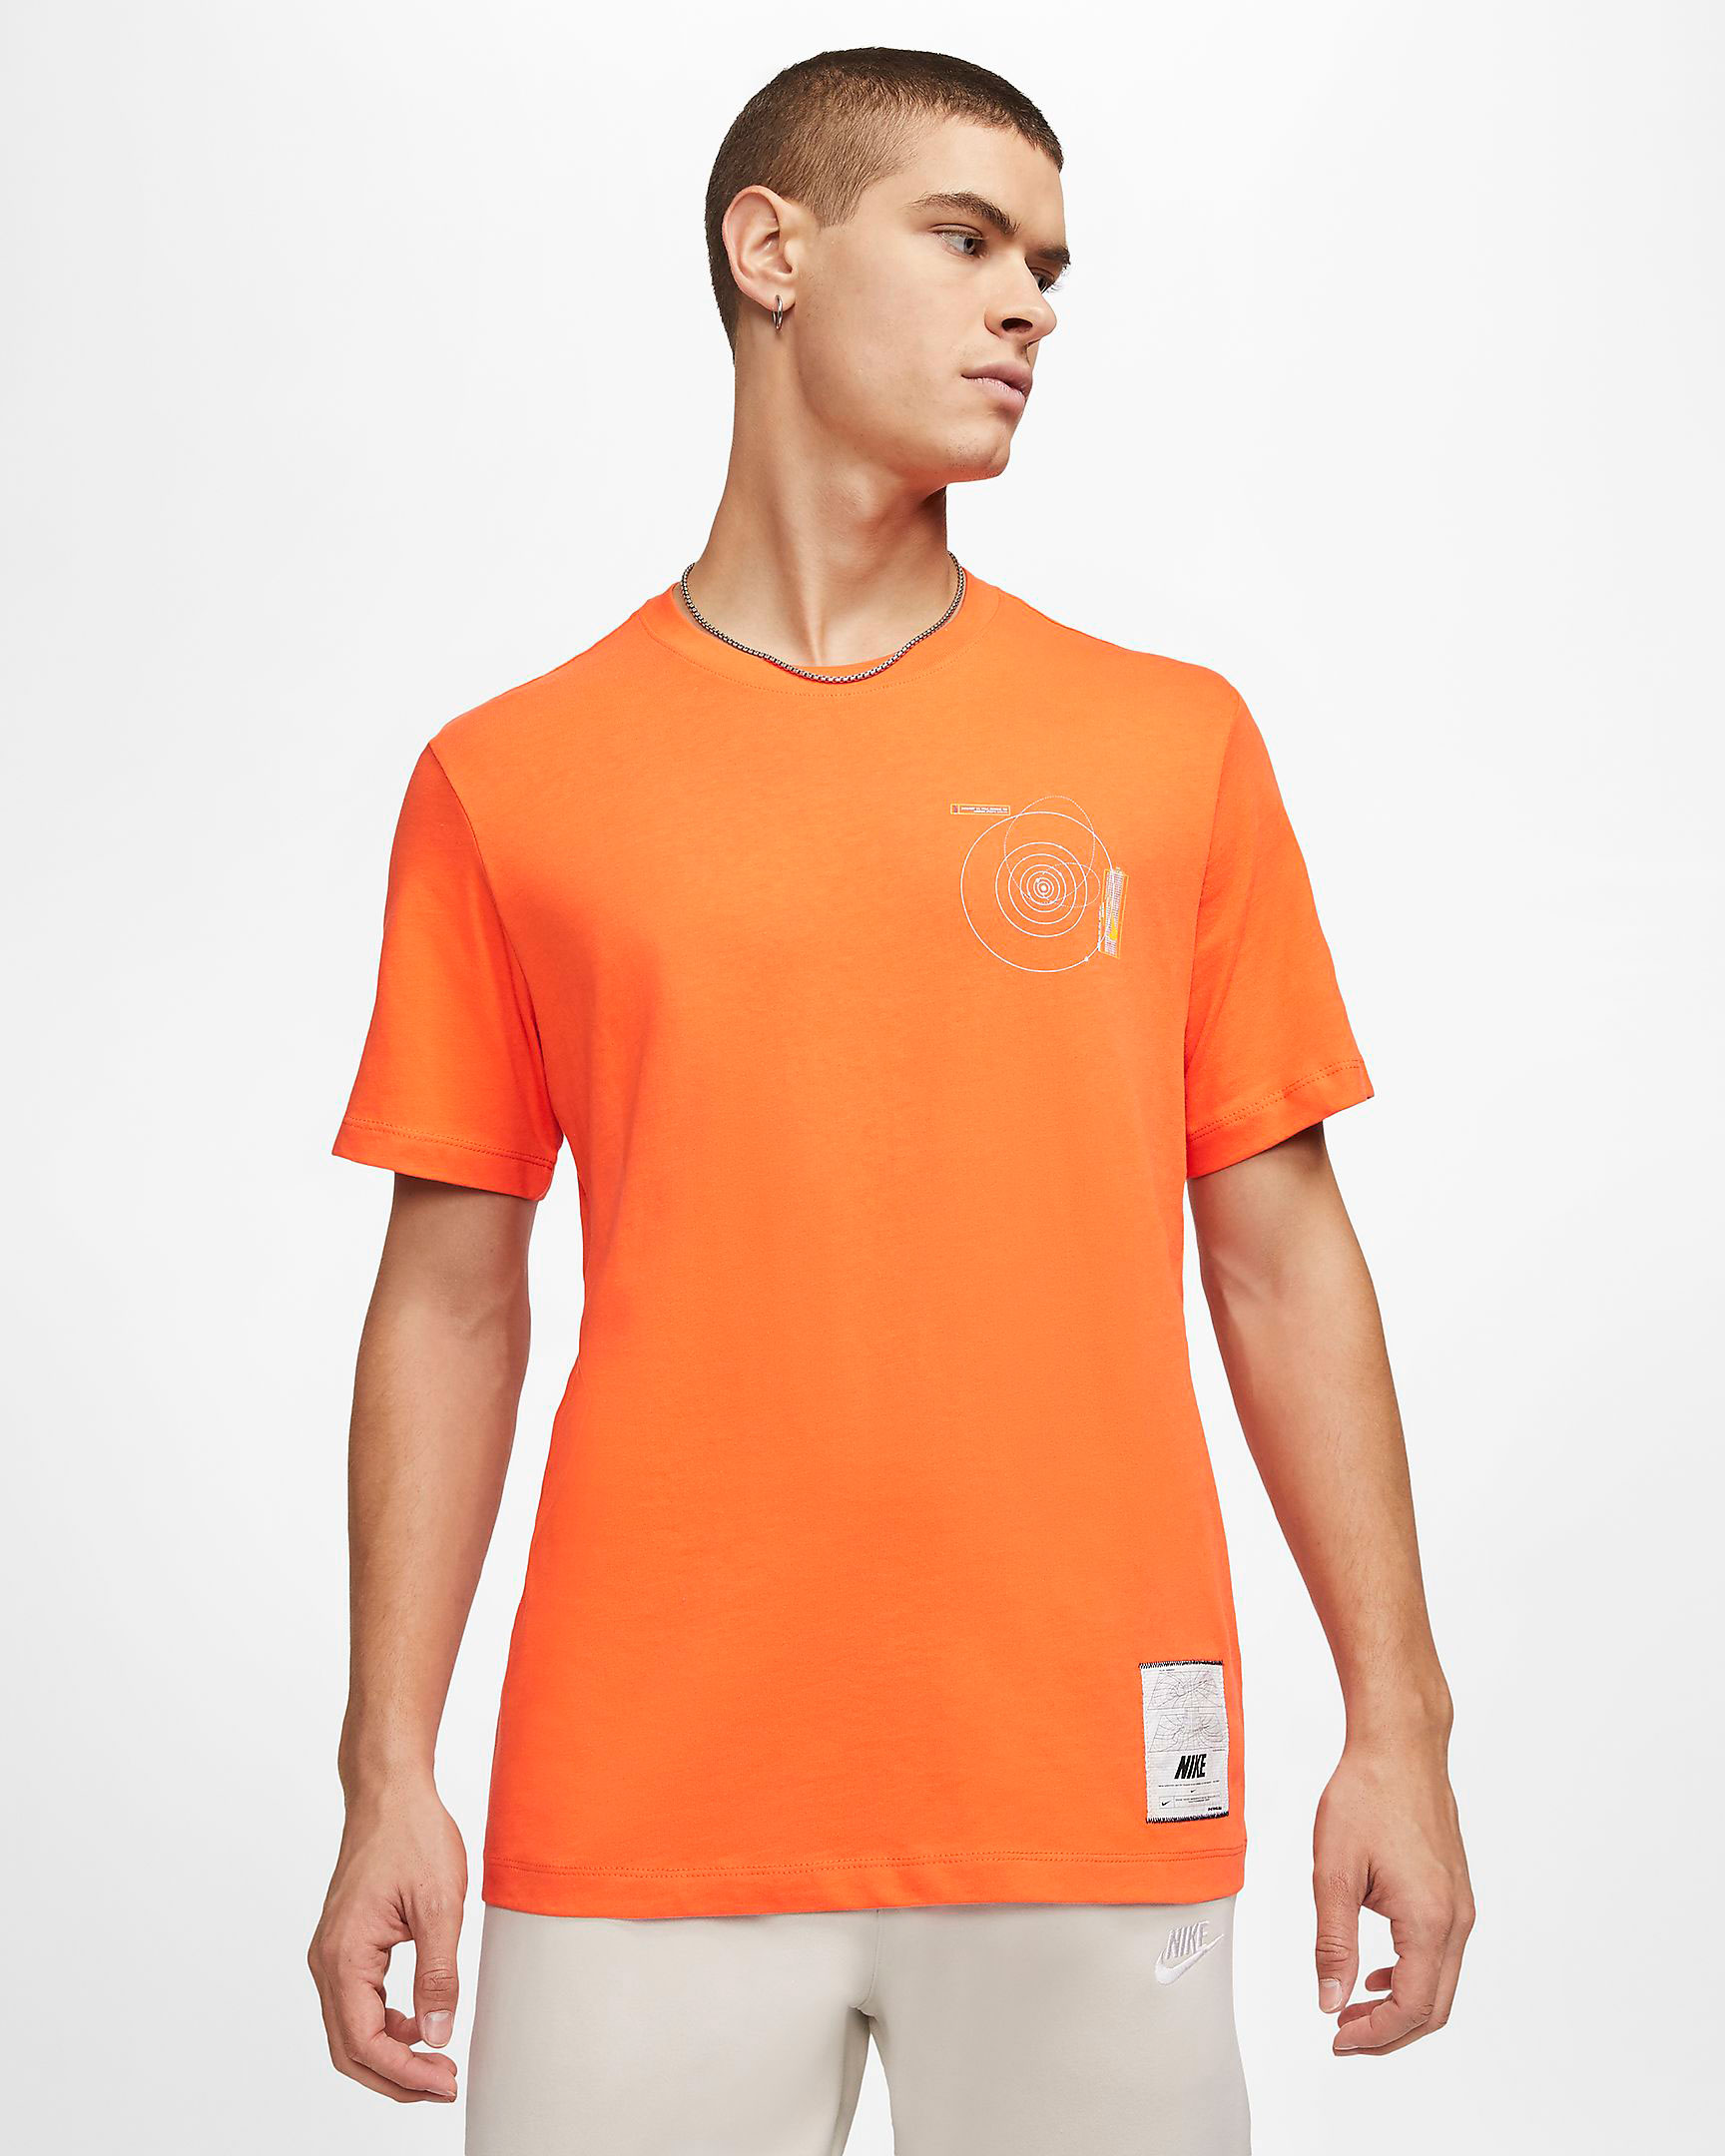 foamposite rugged orange shirt